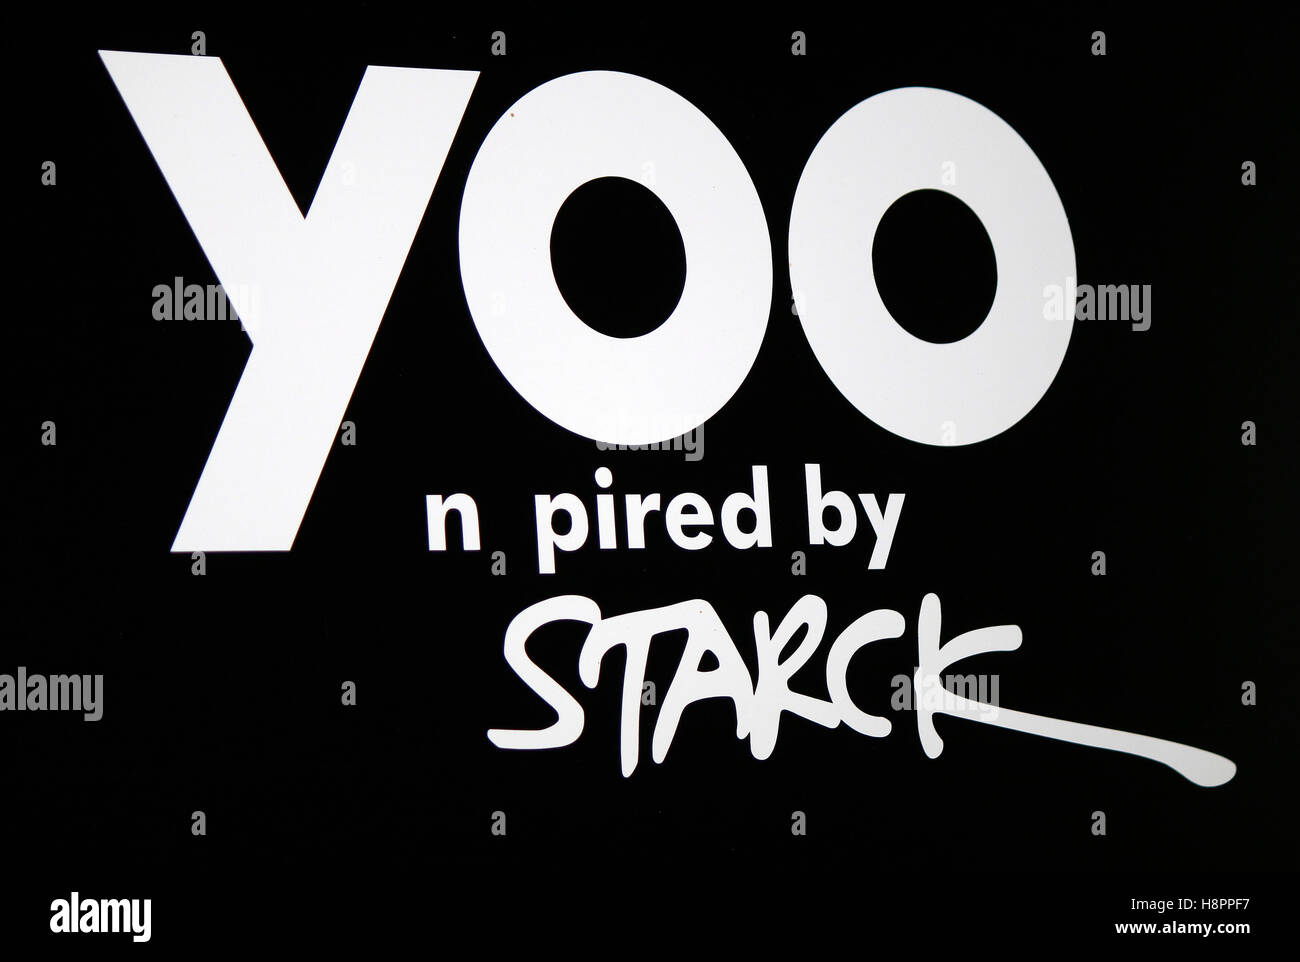 Das Logo der Marke 'Yoo", Berlino. Foto Stock